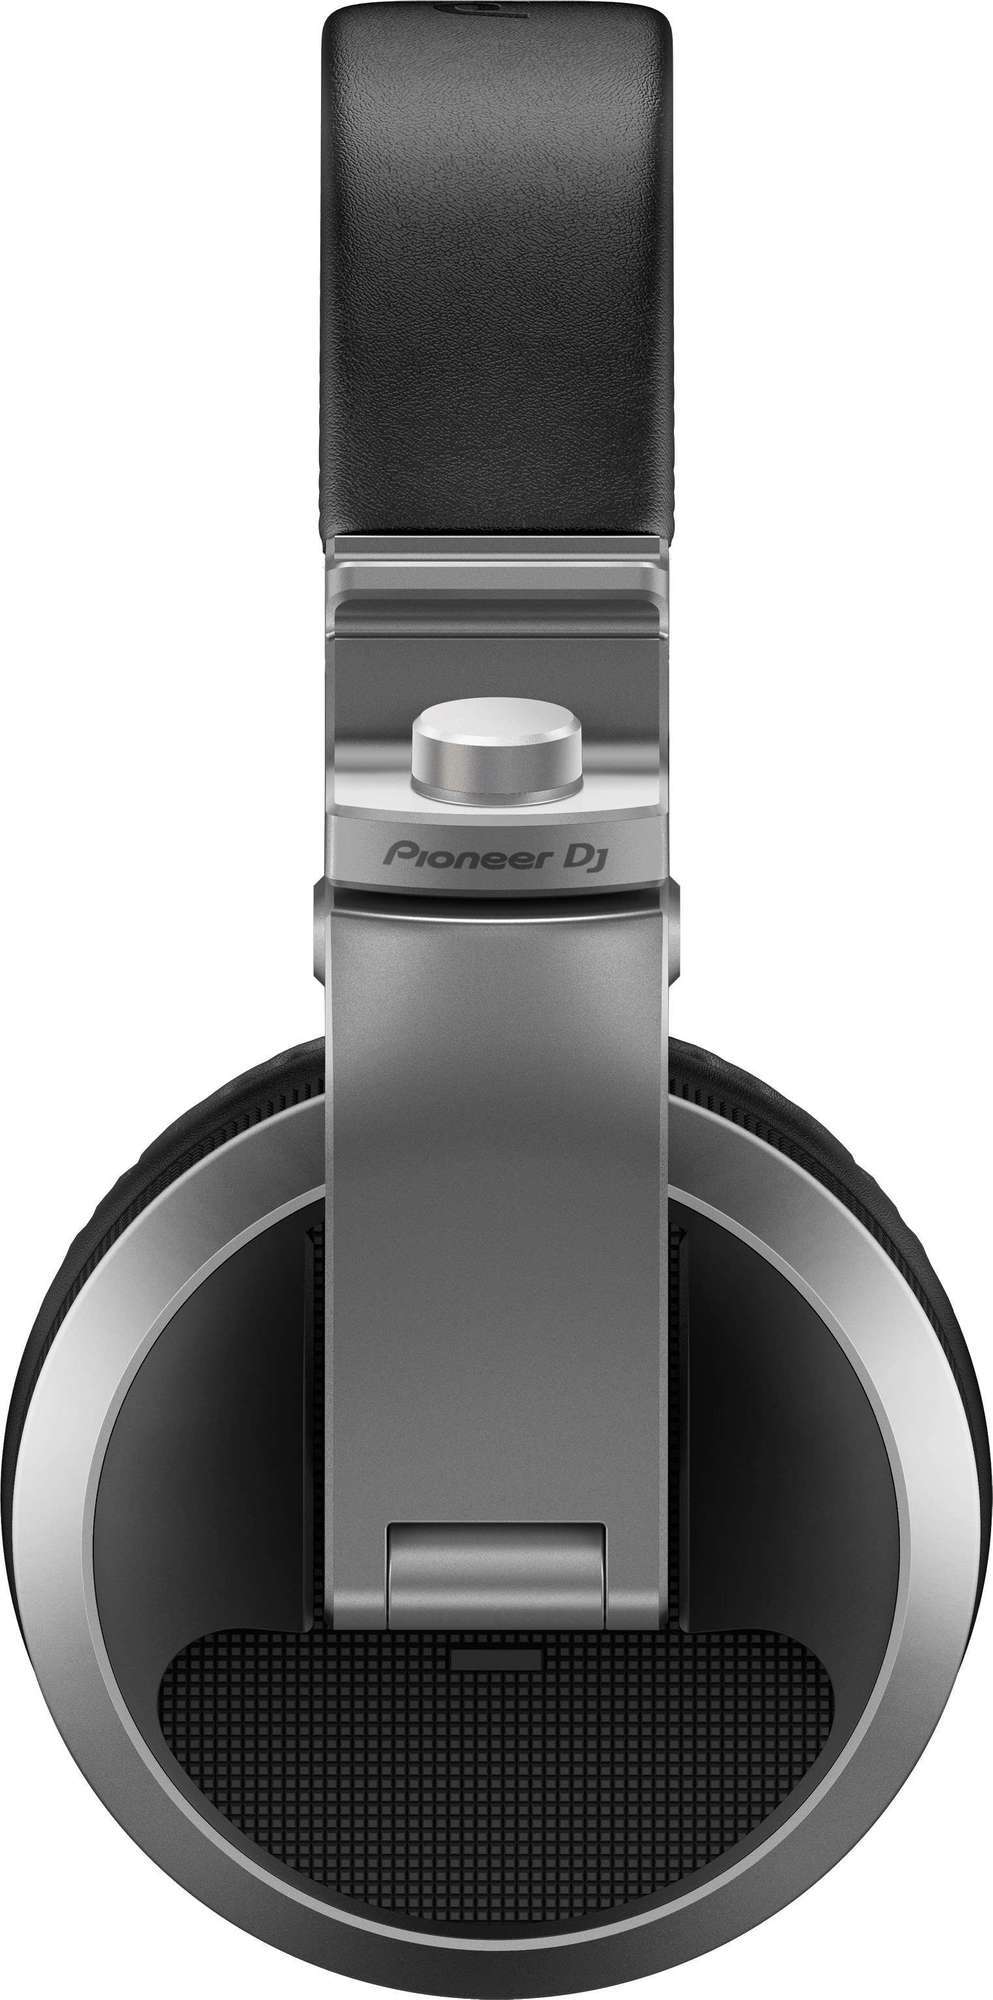 Pioneer DJ HDJ-X5 Headphones Silver